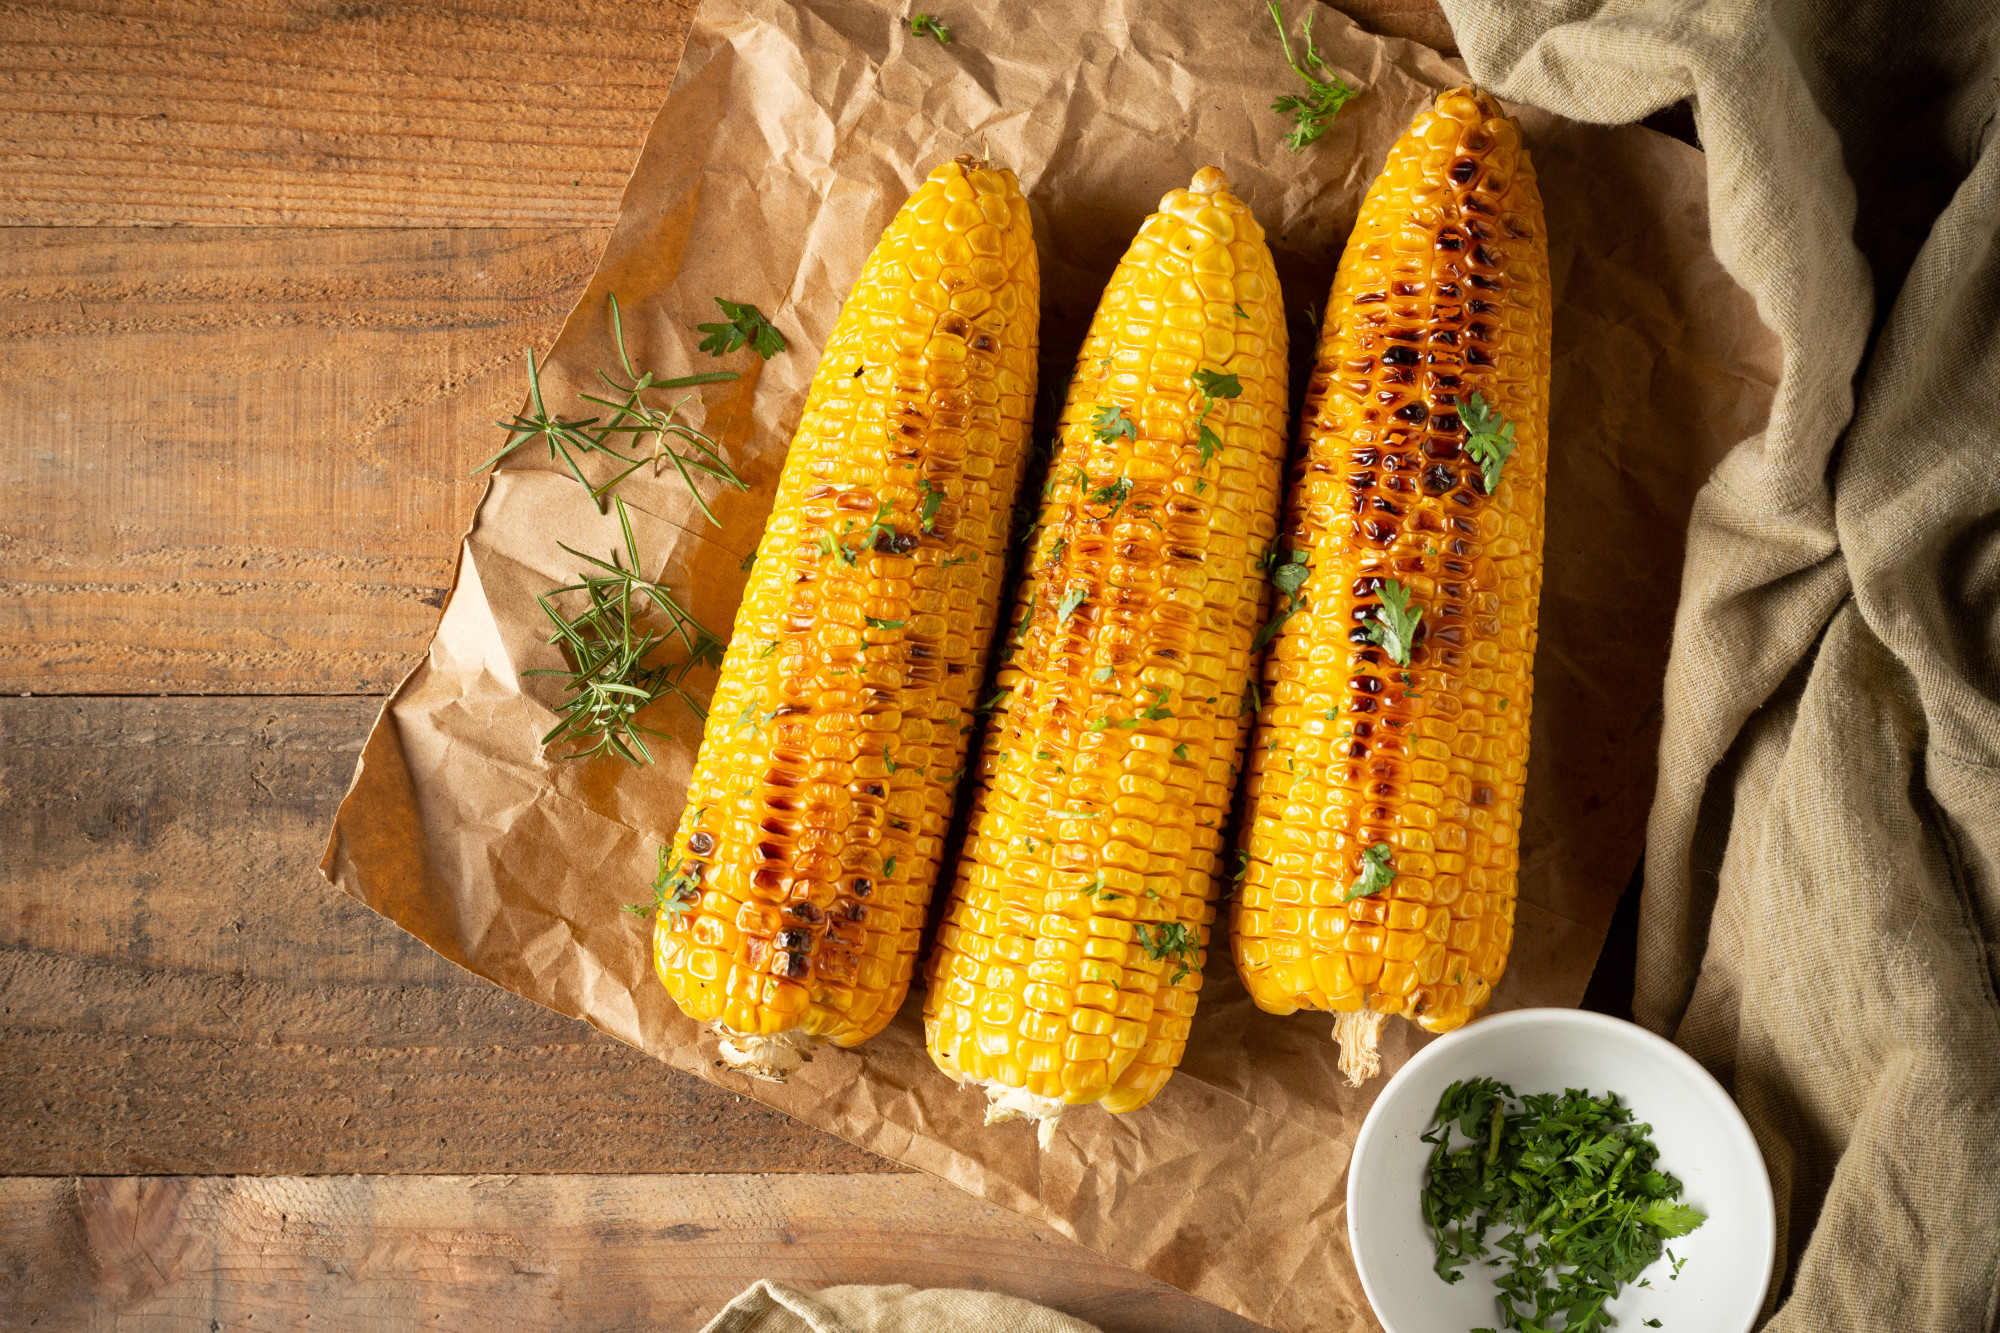 corn has nutritional benefits